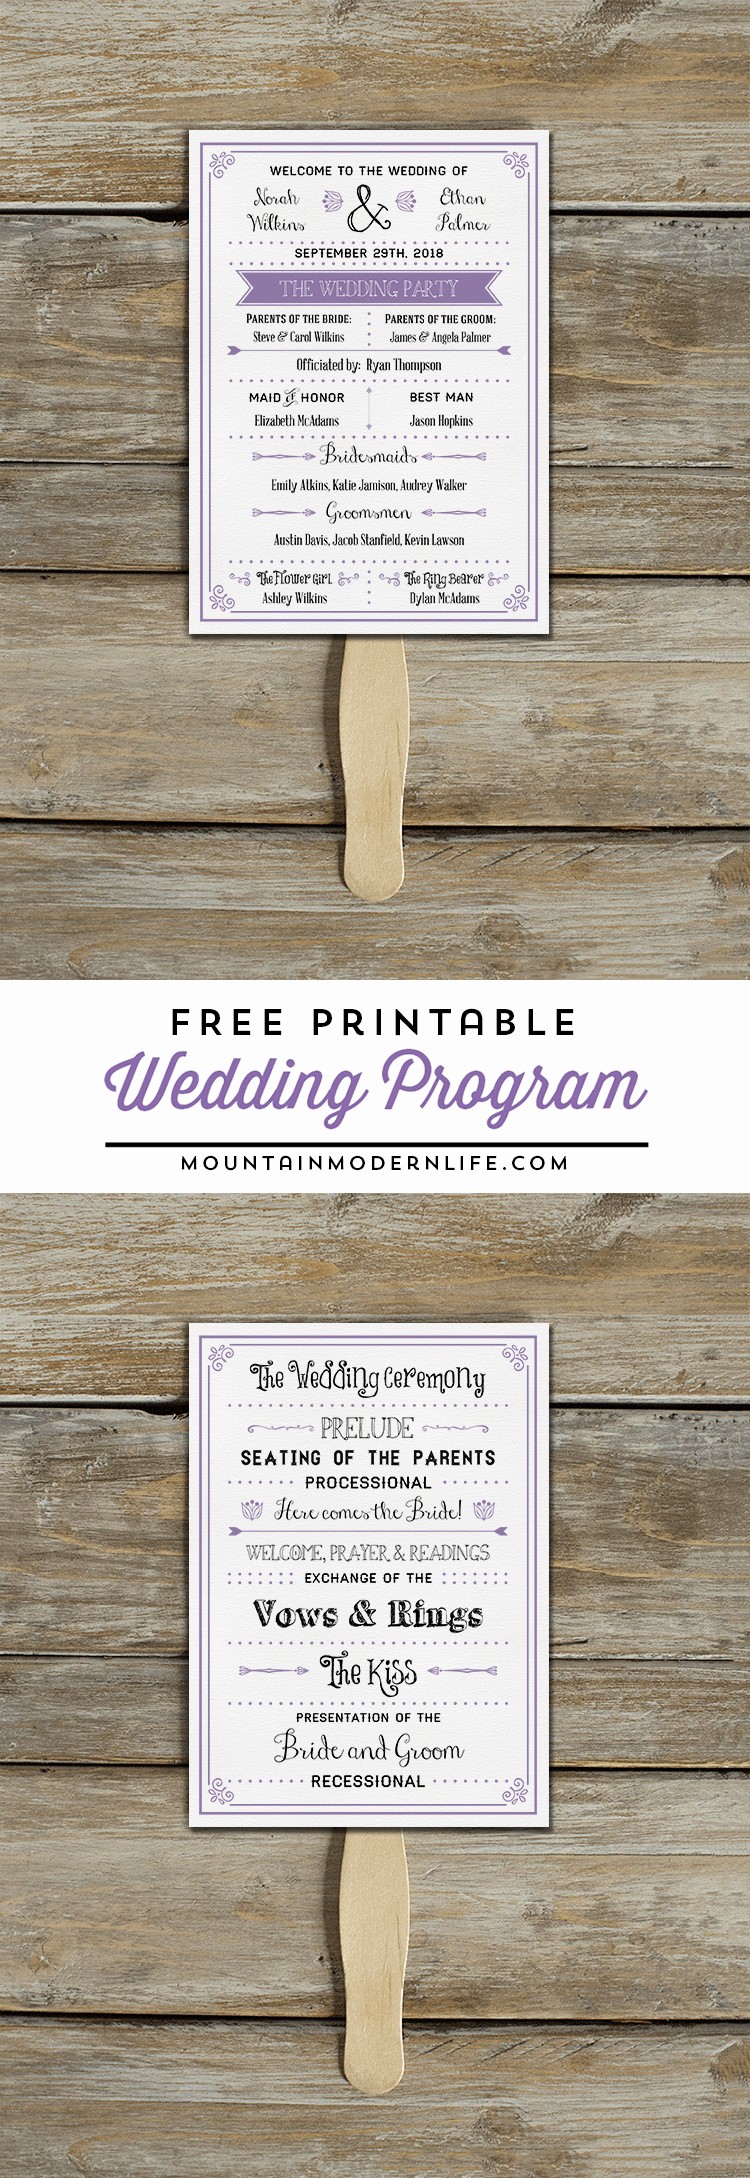 Wedding Programs Templates Free Download Inspirational Free Printable Wedding Program